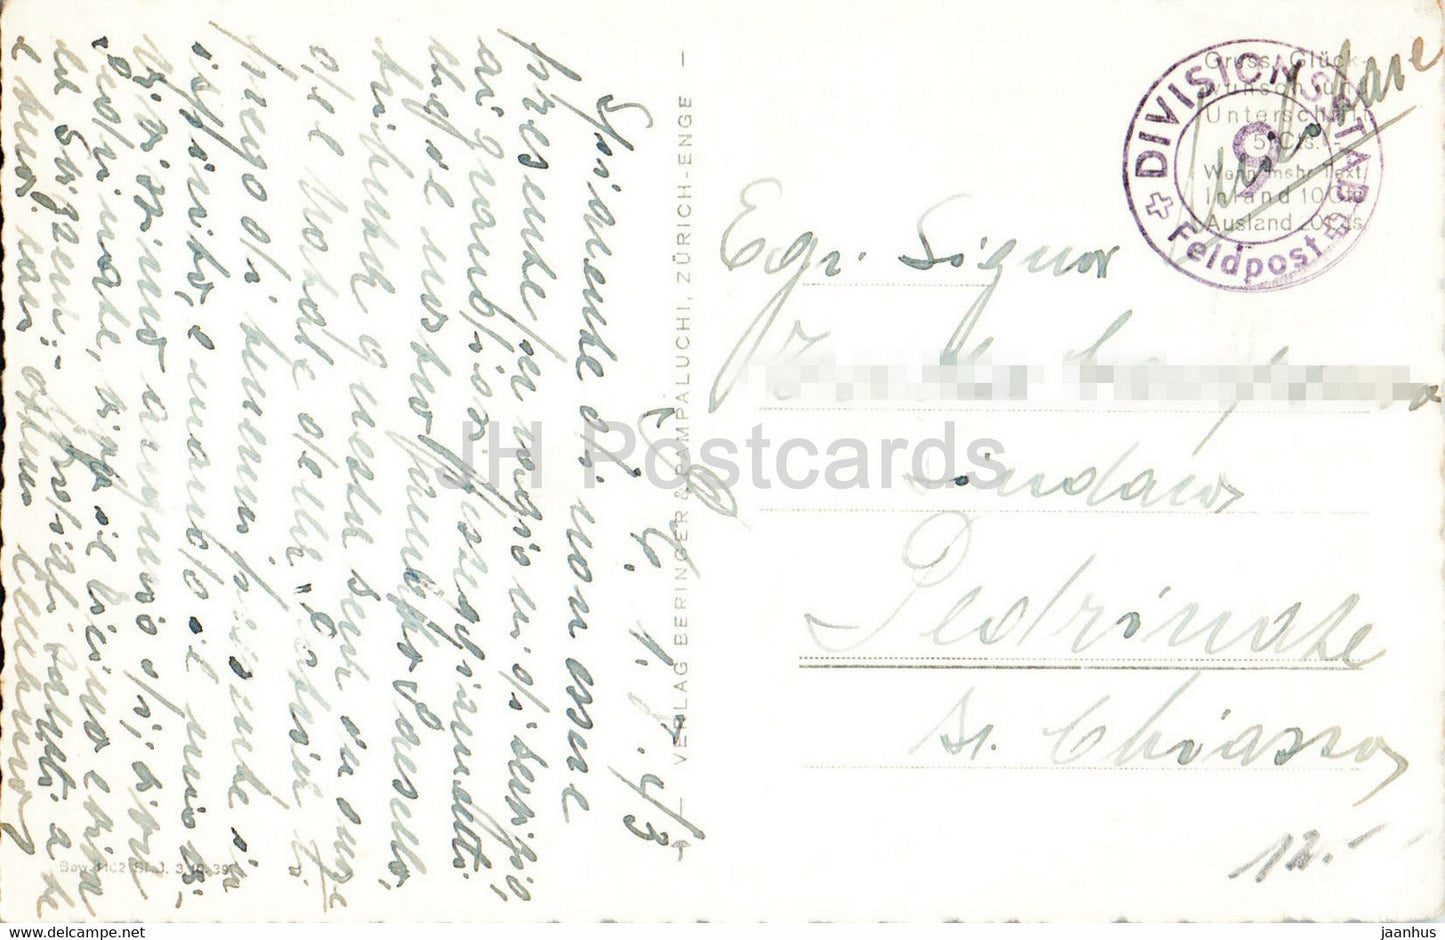 Andermatt gegen die Furka - military mail - Feldpost - 1036 - old postcard - 1943 - Switzerland - used